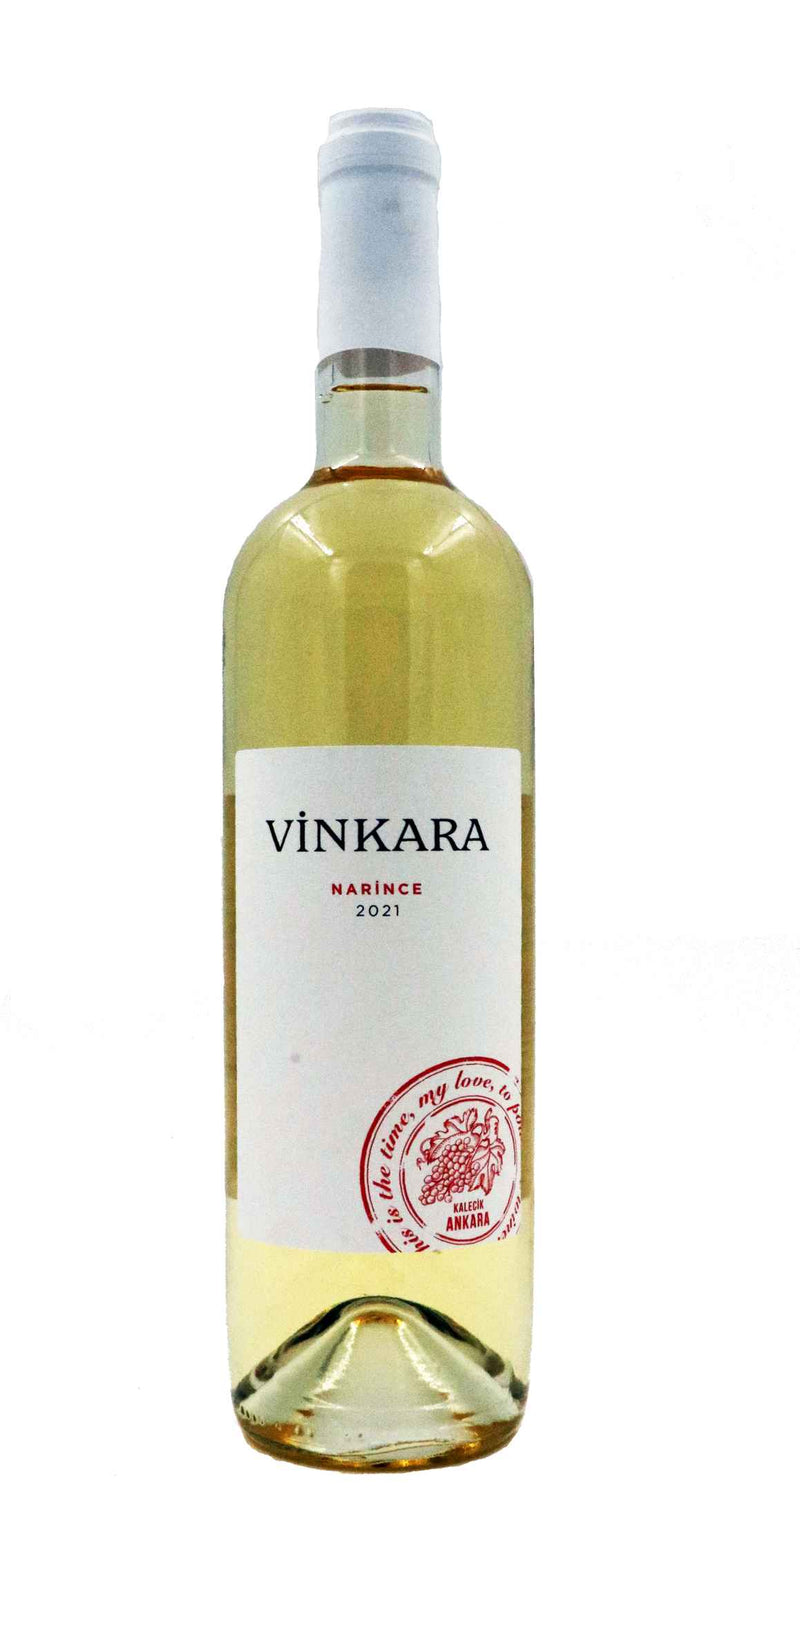 Vinkara - Narince 2021